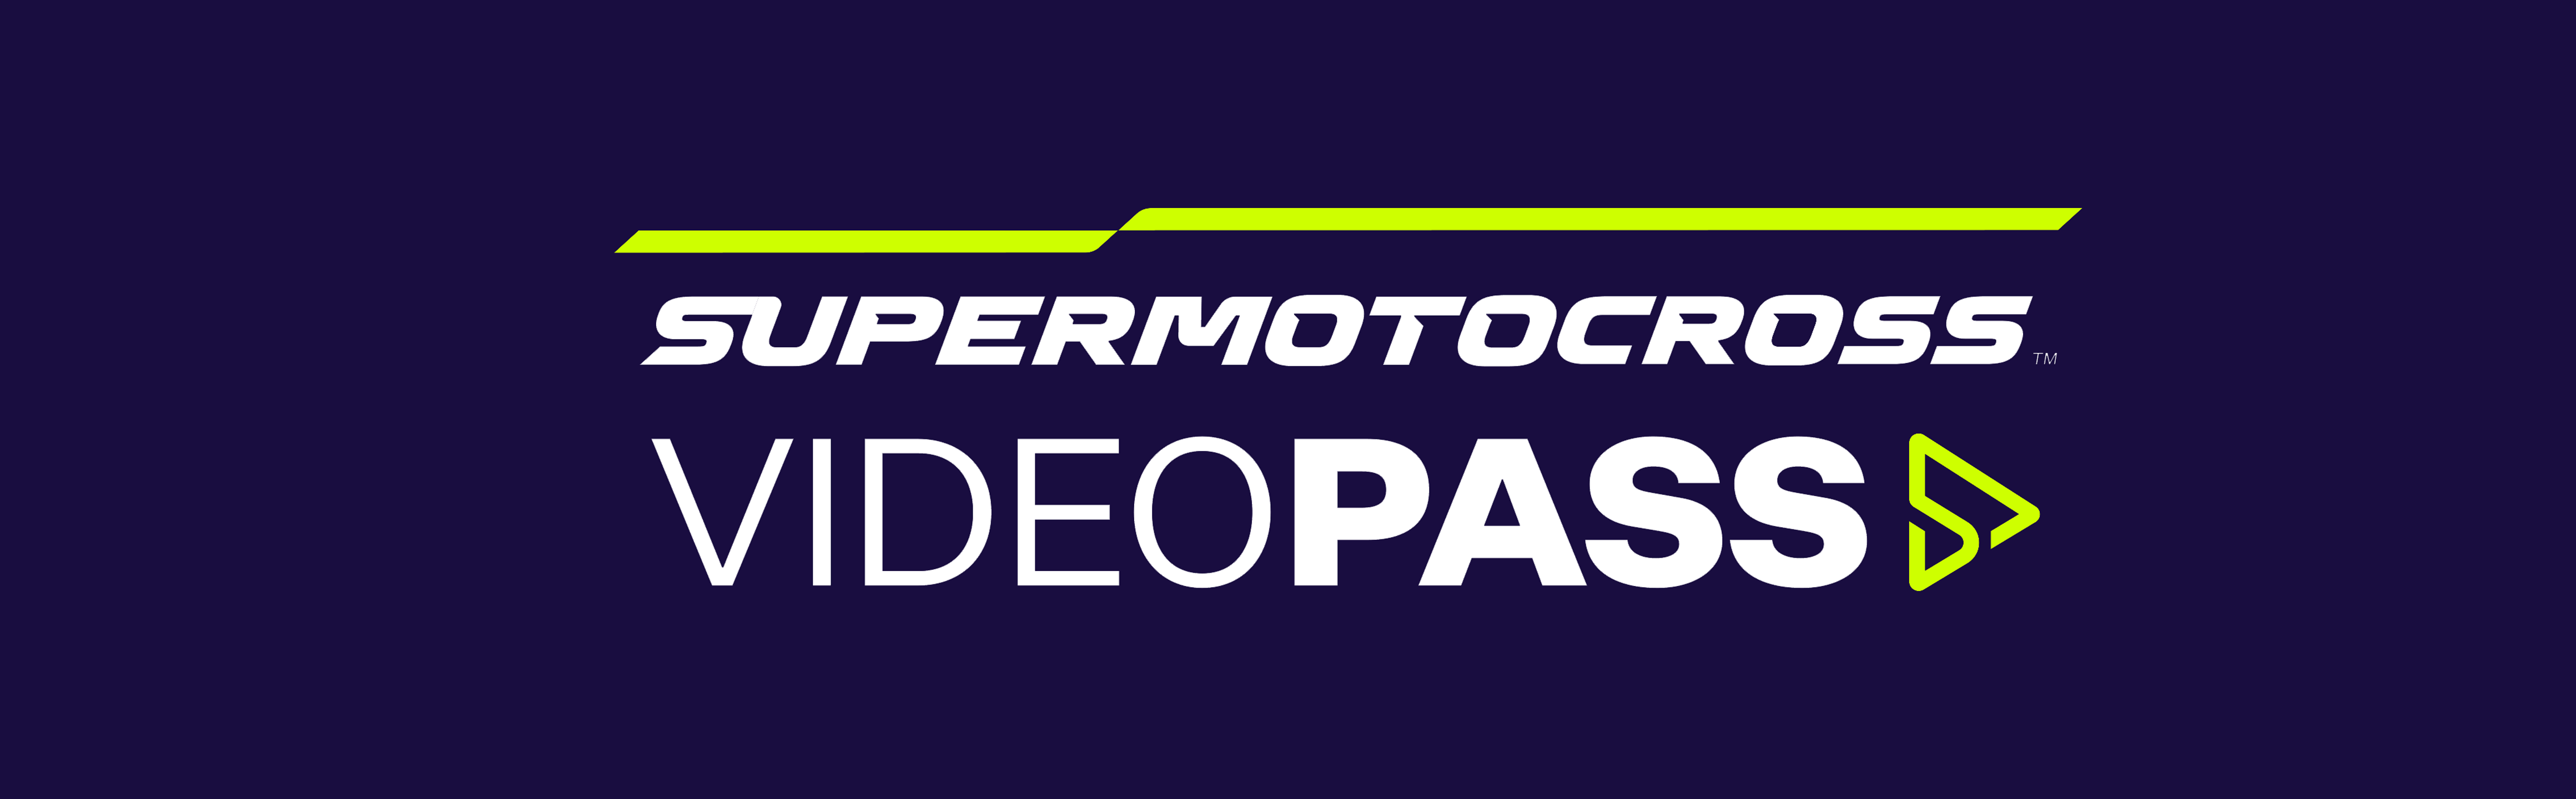 SuperMotocross VideoPass logo